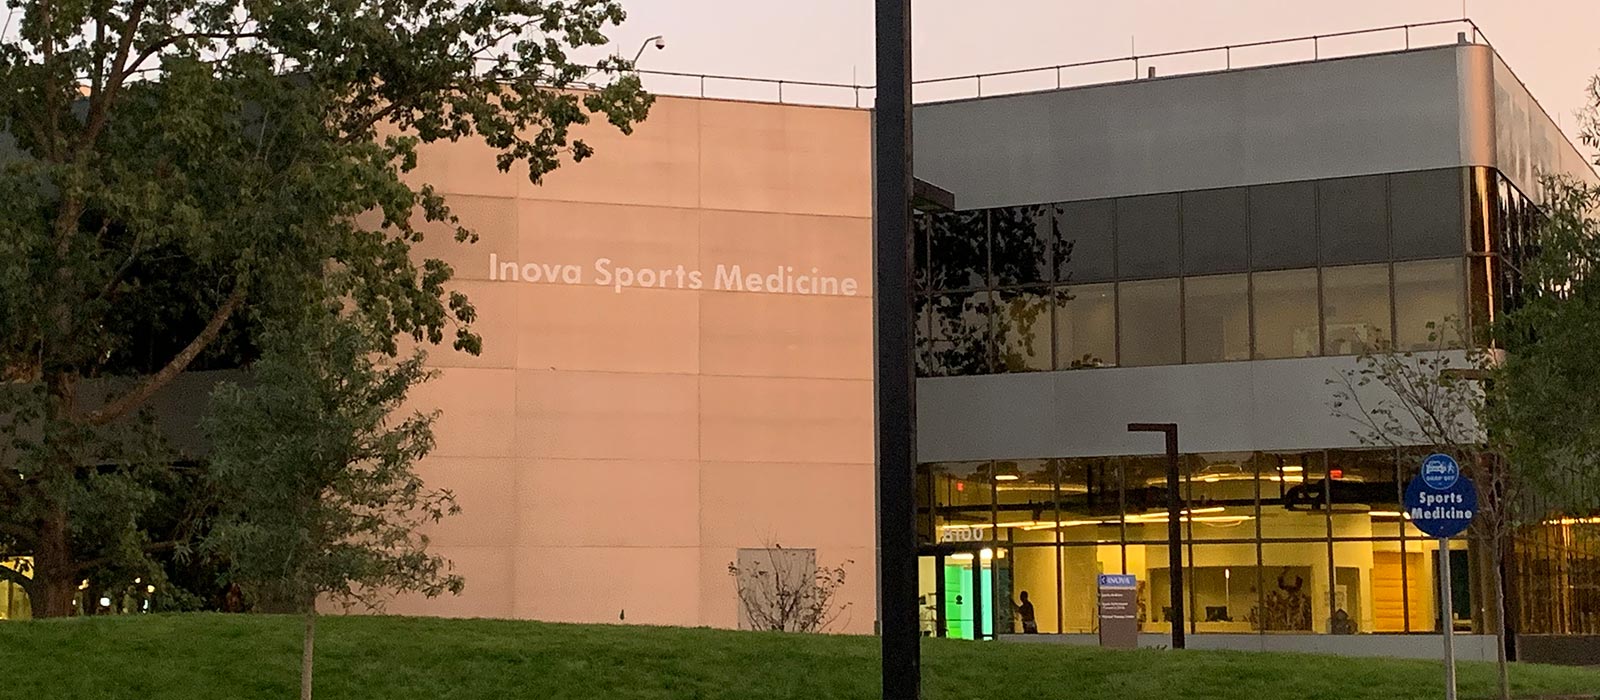 Inova sports medicine building entrance